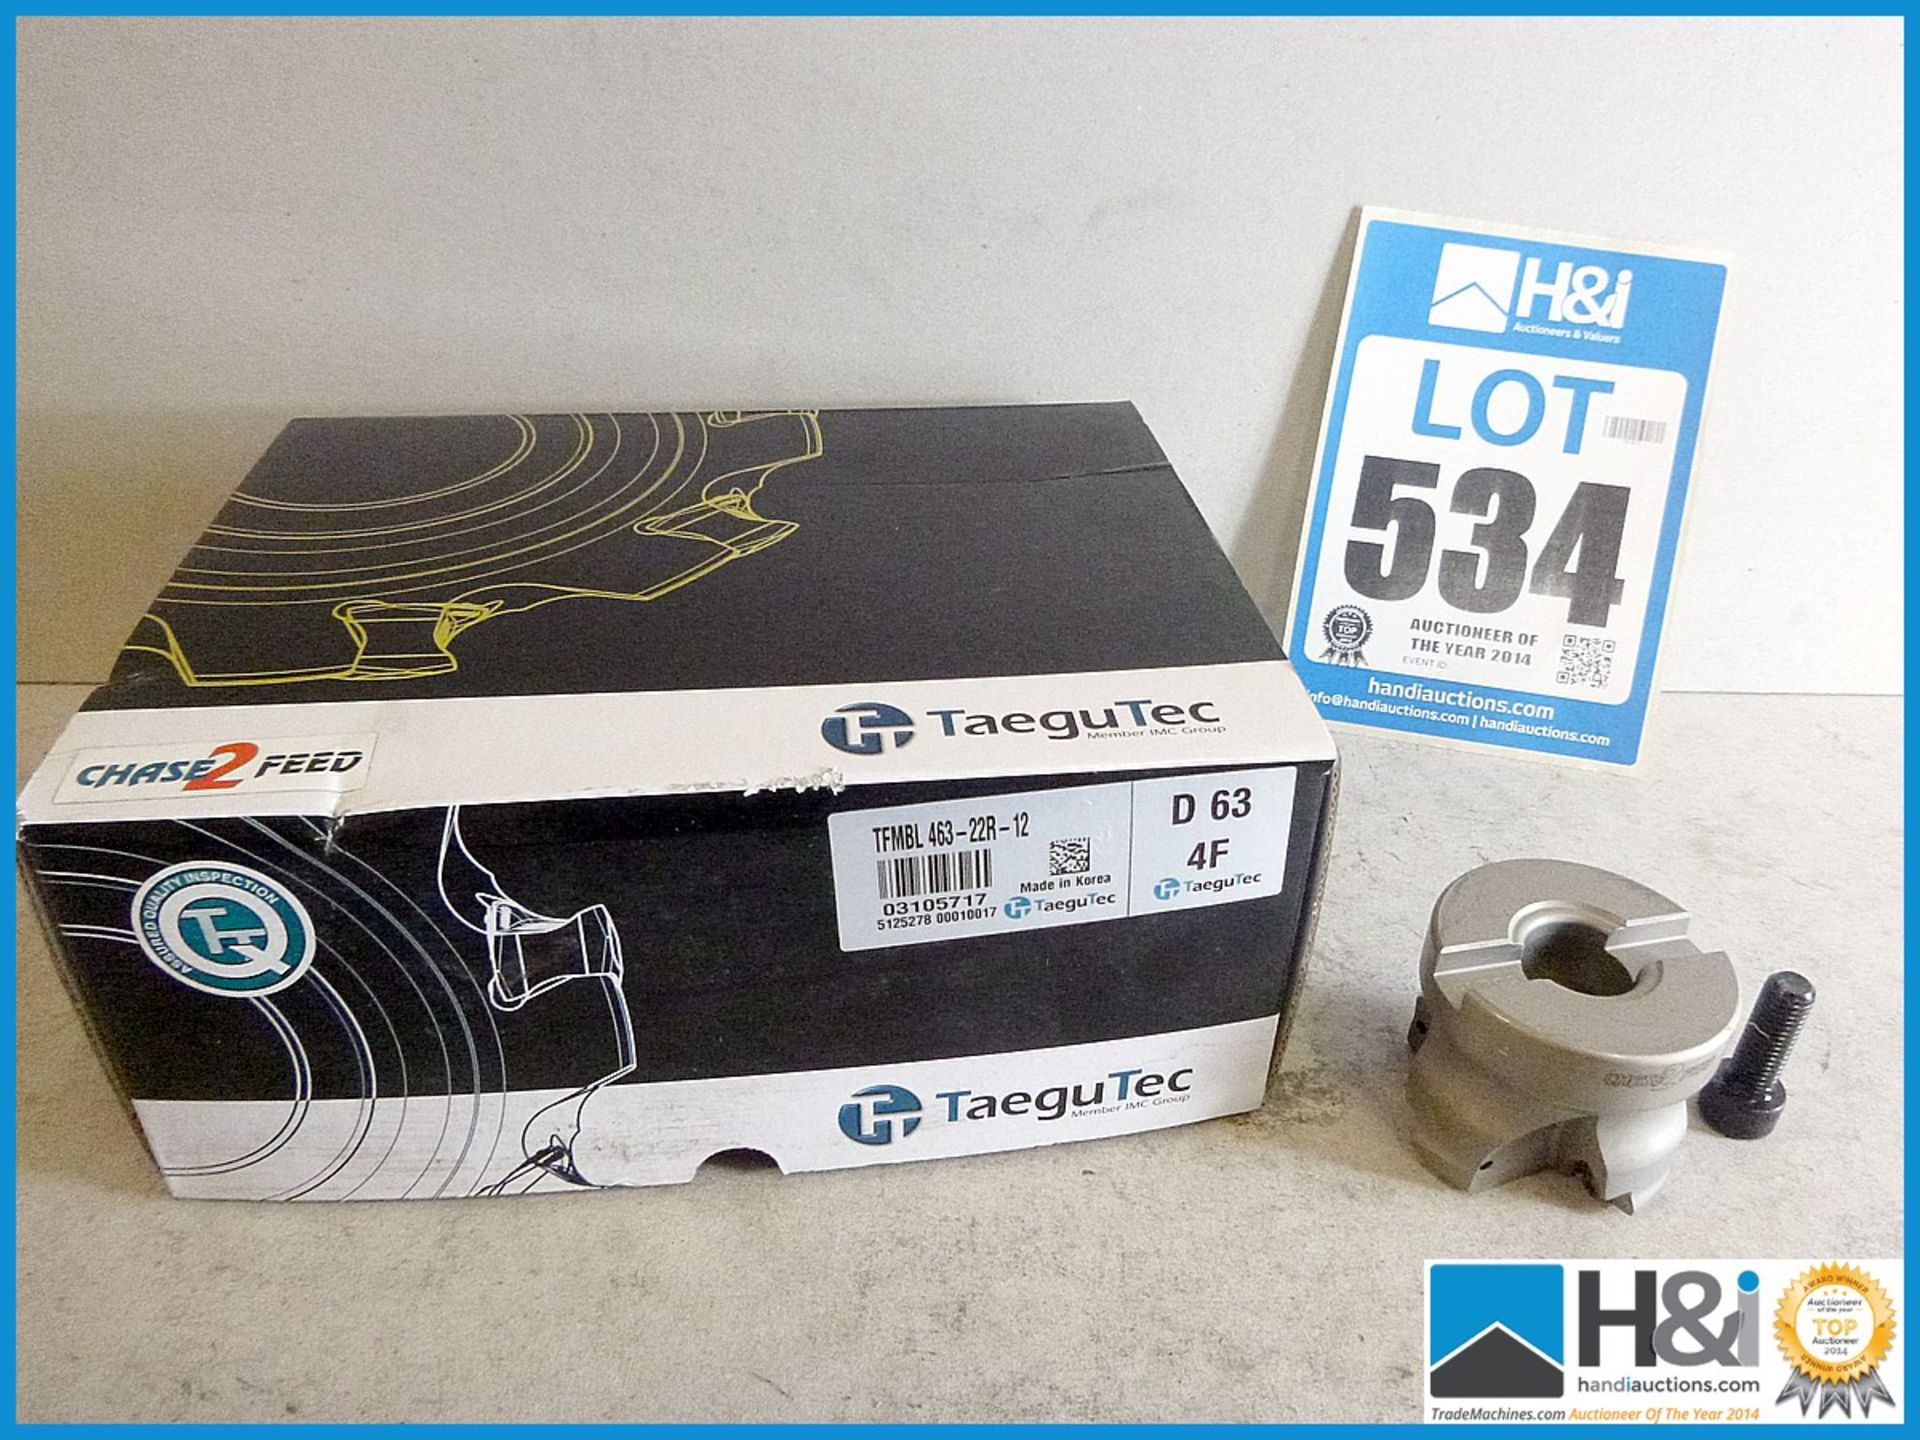 TFMBL463-22-R12 TAEGUTEC. Appraisal: New, unused in original packaging. Viewing essential Serial No: